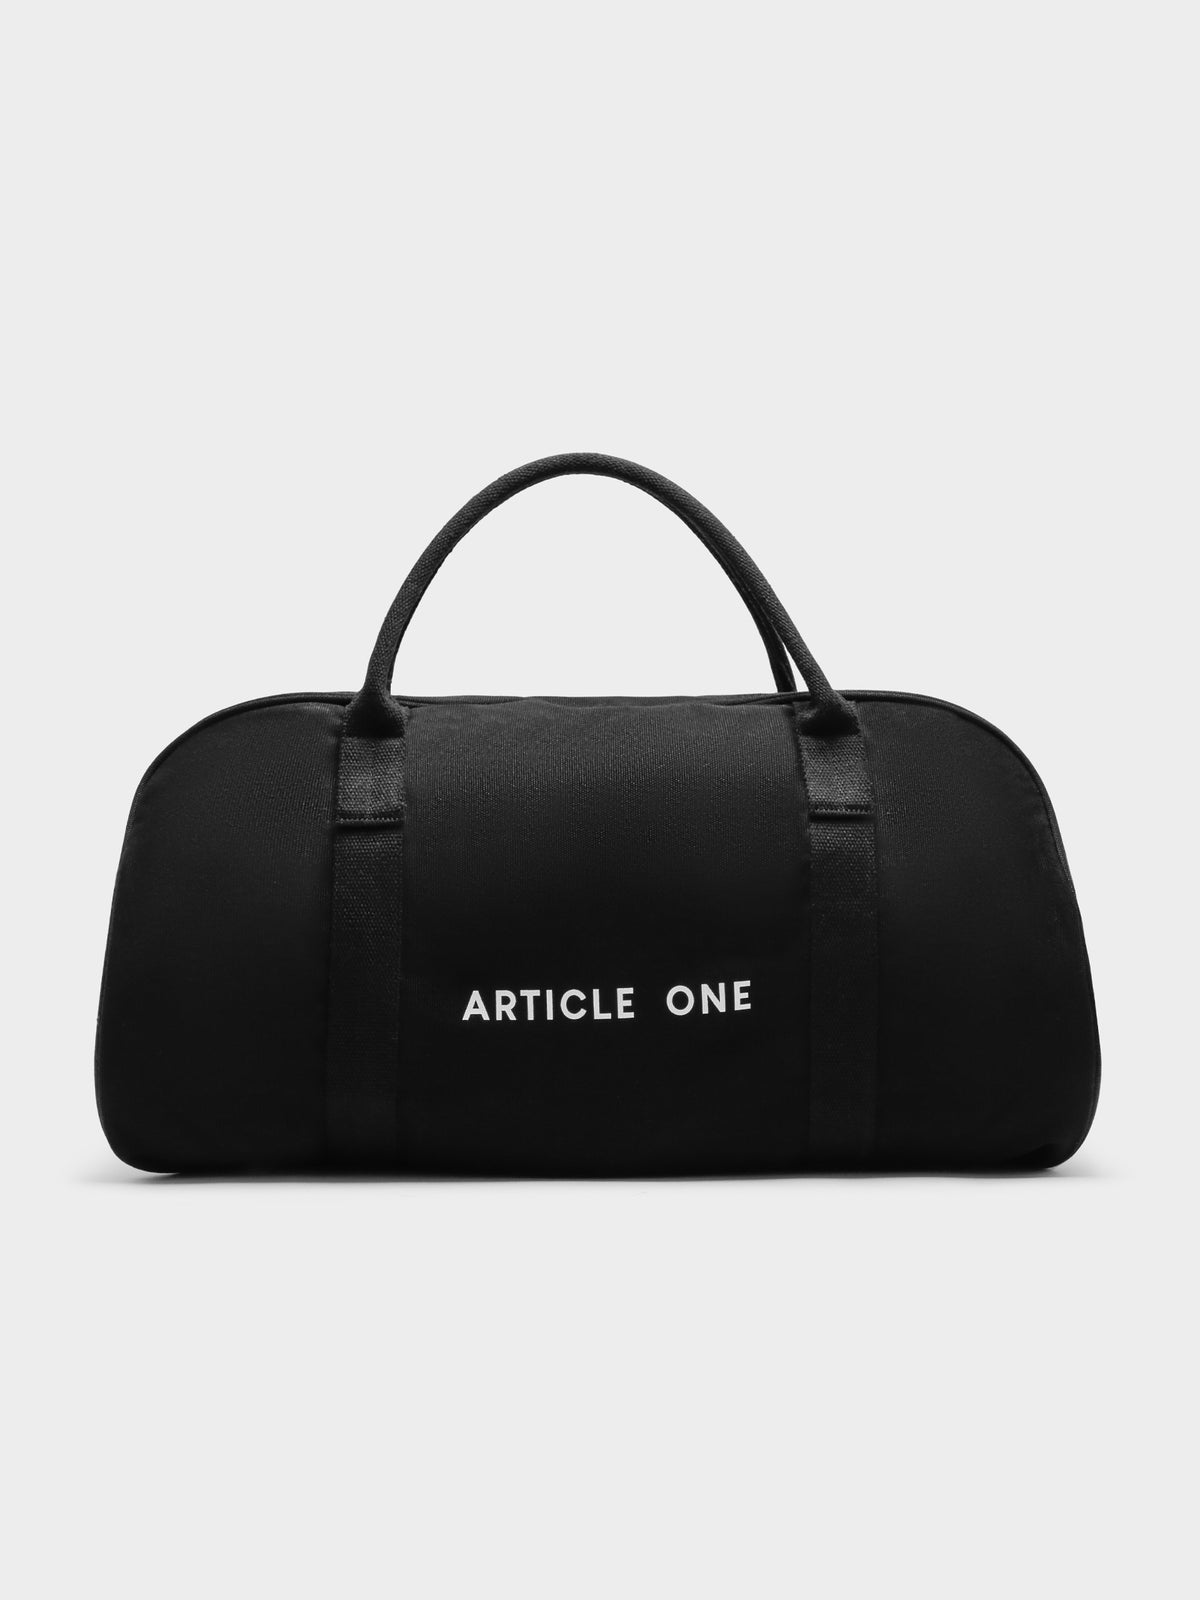 Duffle Bag in Black